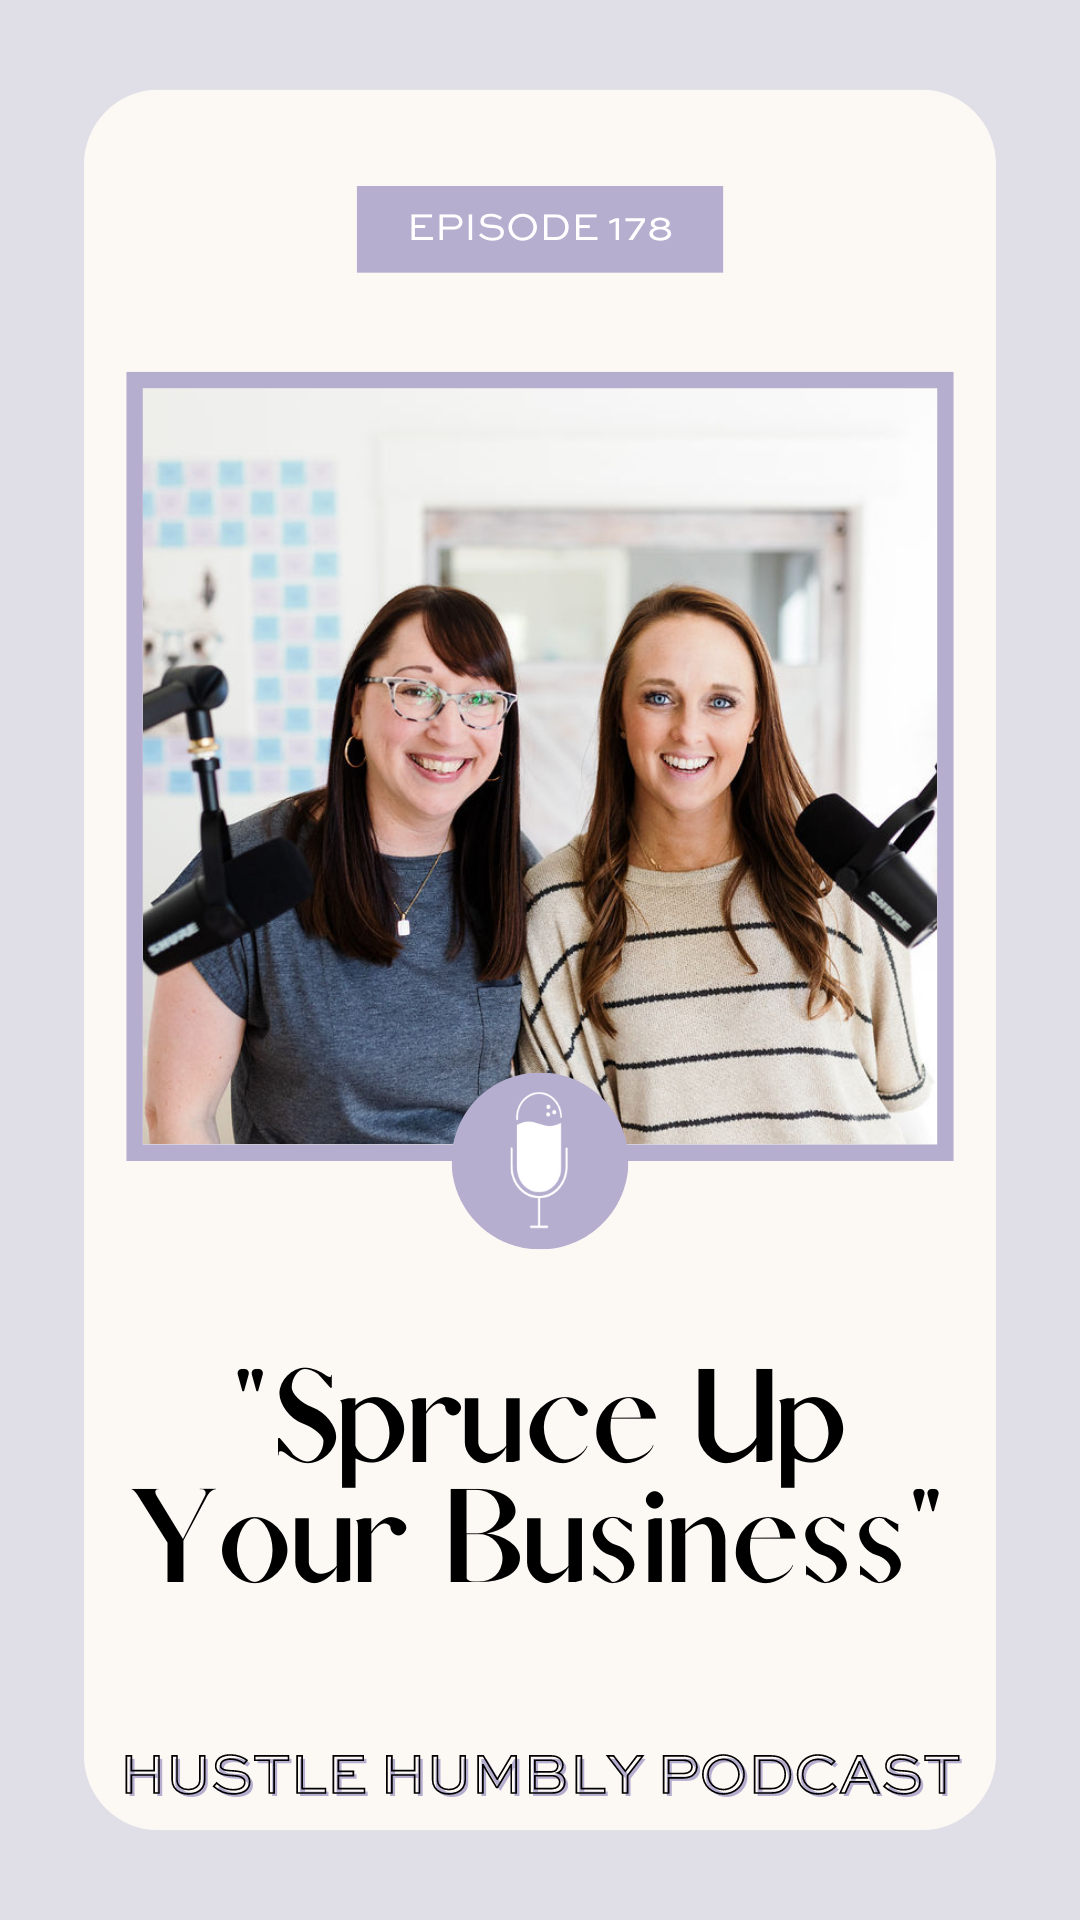 Hustle Humbly Podcast Episode 178: Spruce Up Your Biz